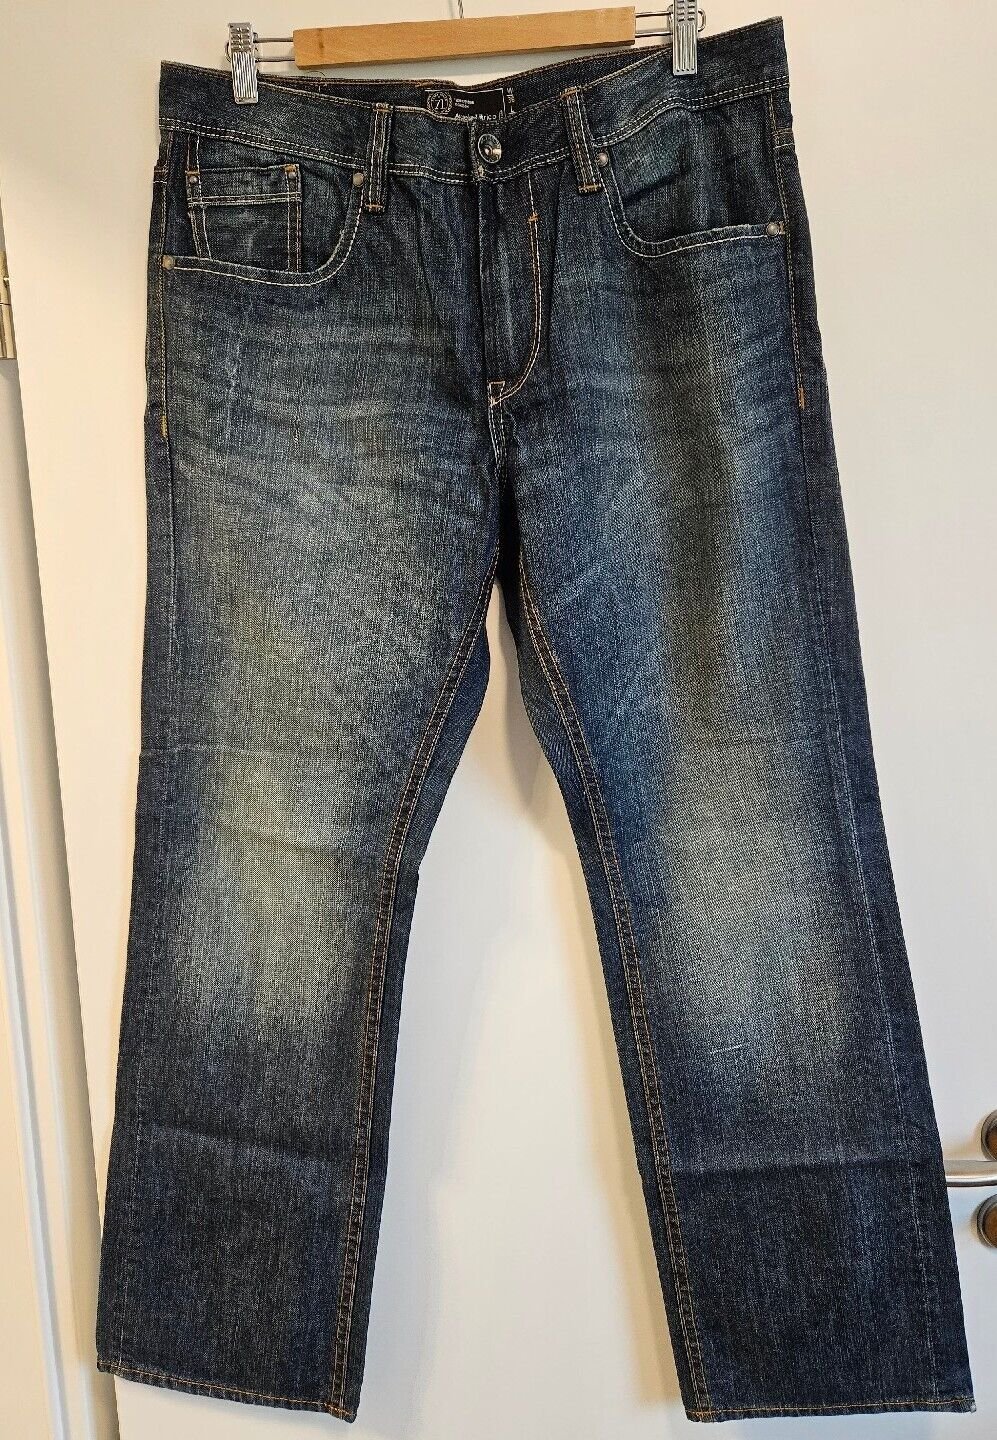 Angelo Litrico - Trendy Herren Jeans (C&A) Gr. W36 L32 blau NEU ::  Kleiderkorb.ch